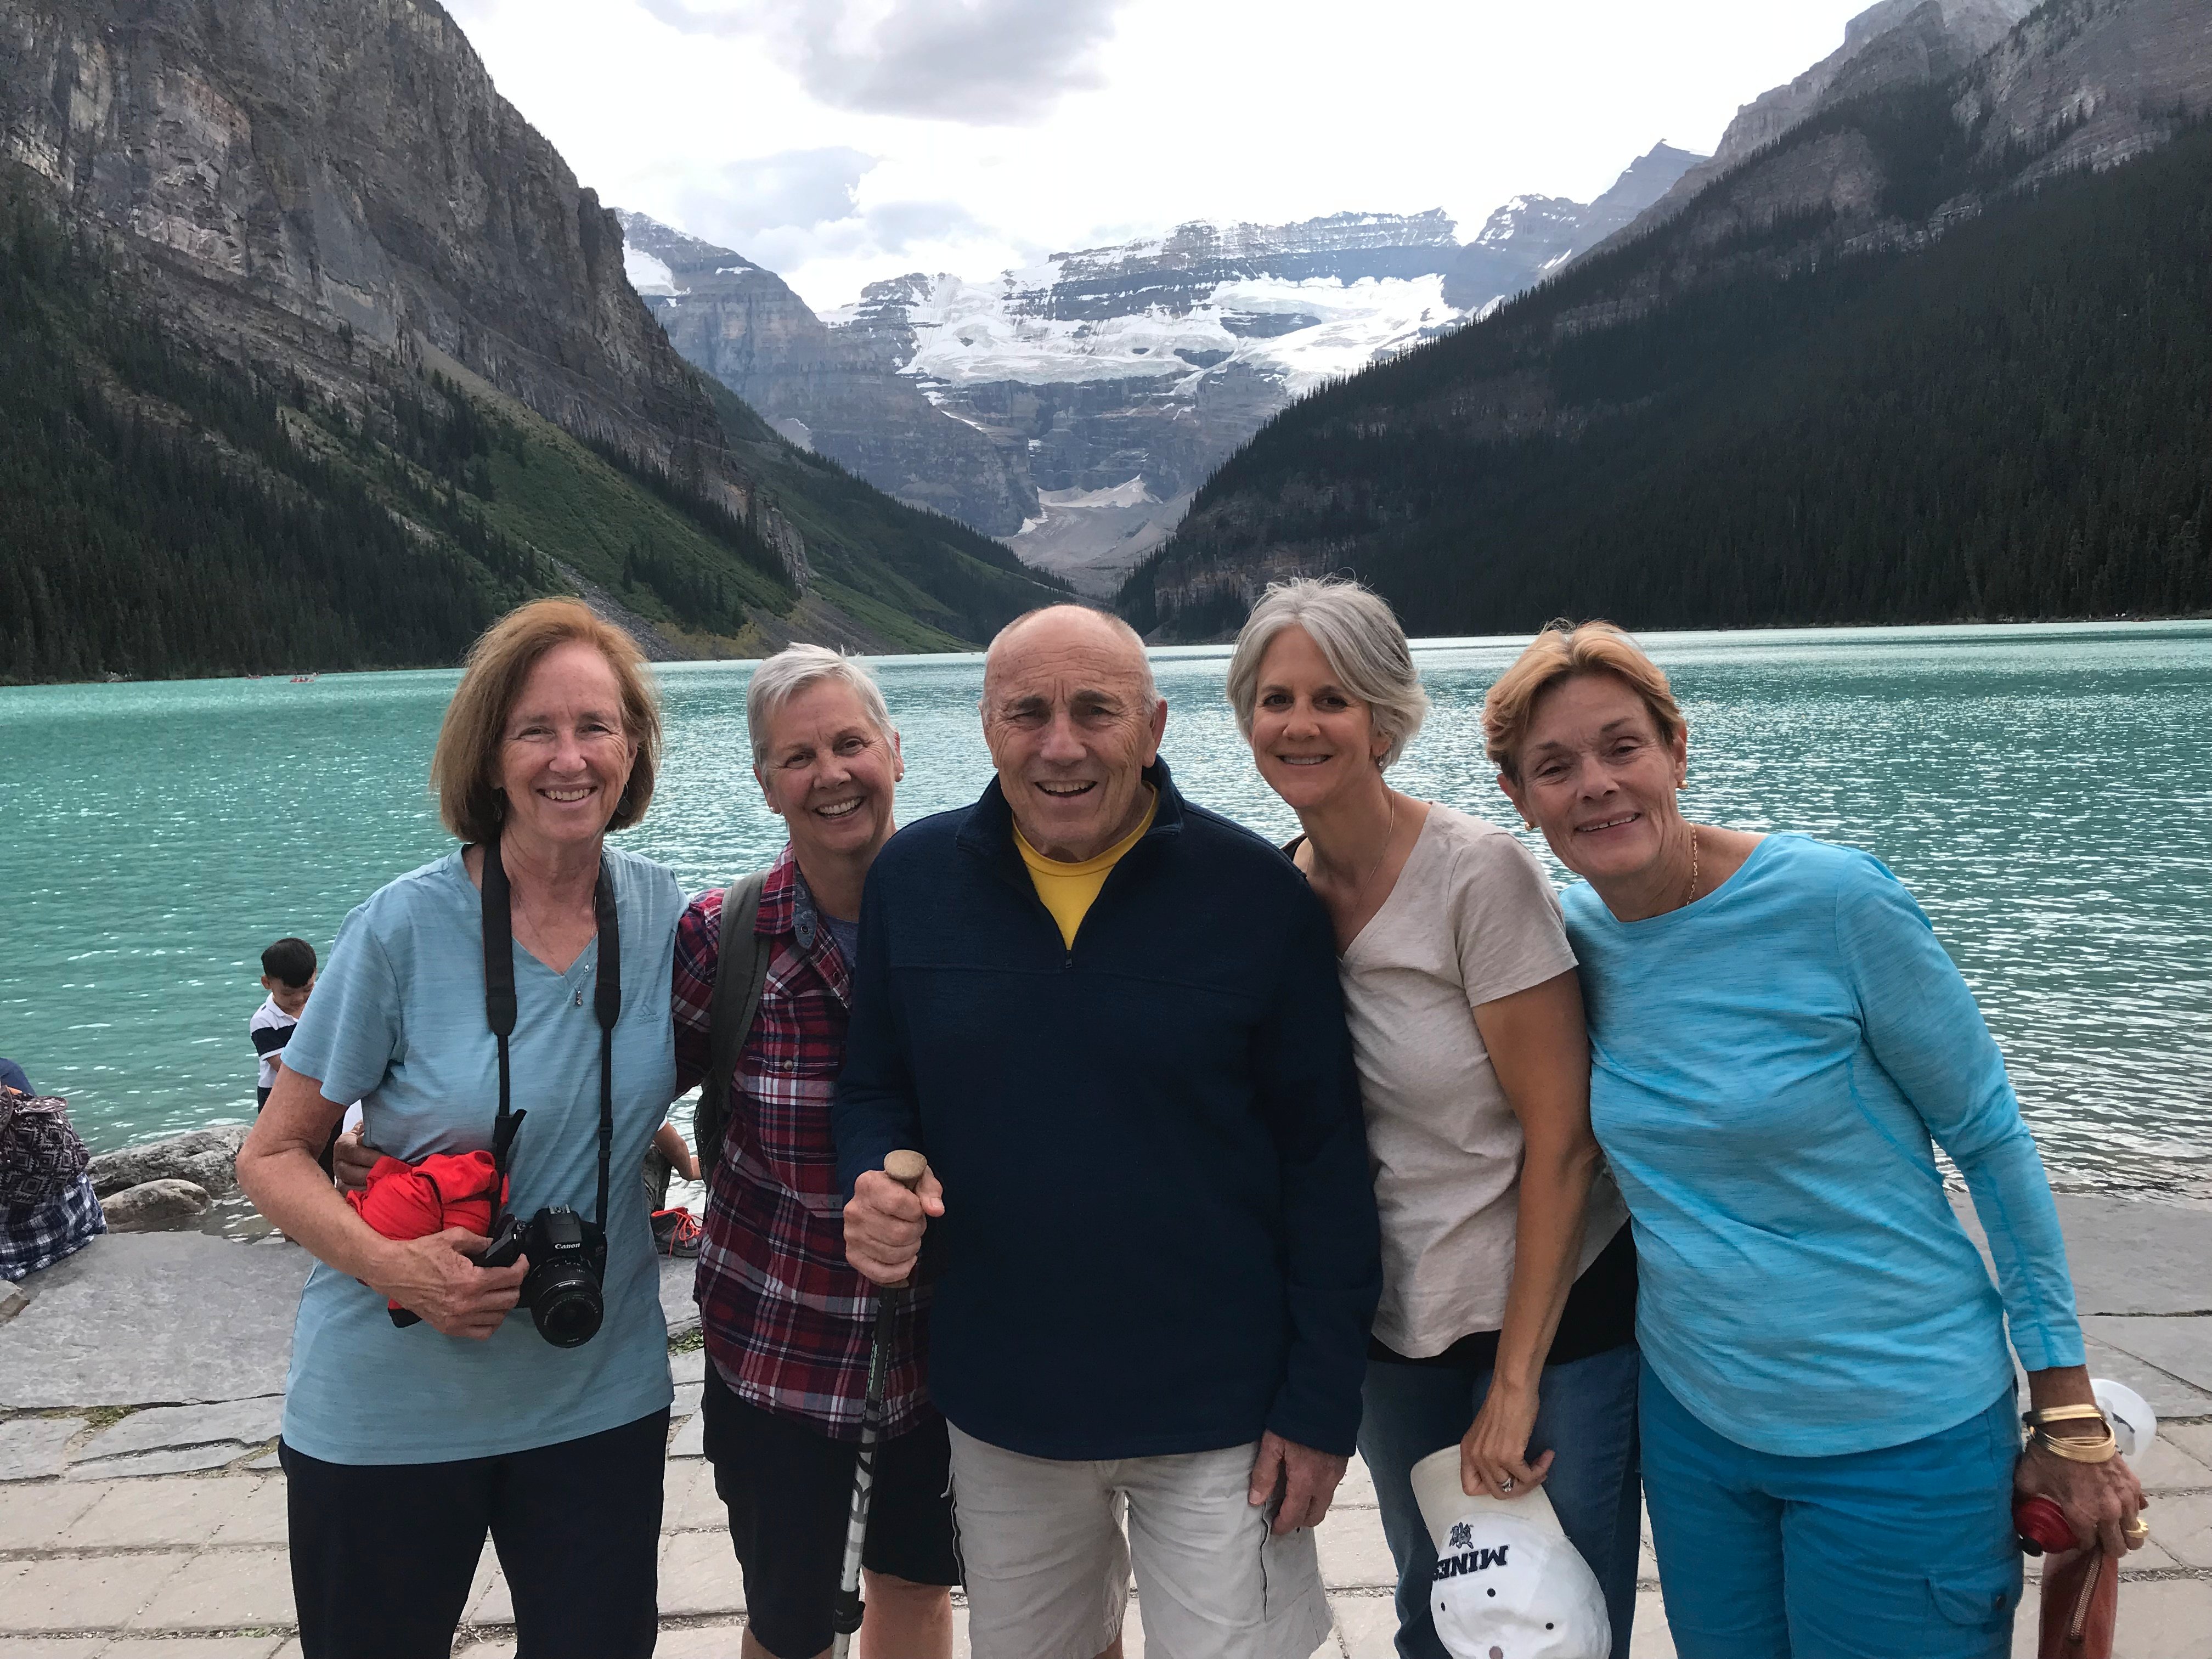 August 2019--Lea Anne, Gretchen, John, Beth & Judy at Lake Louise, Banff National Park, Alberta, Canada